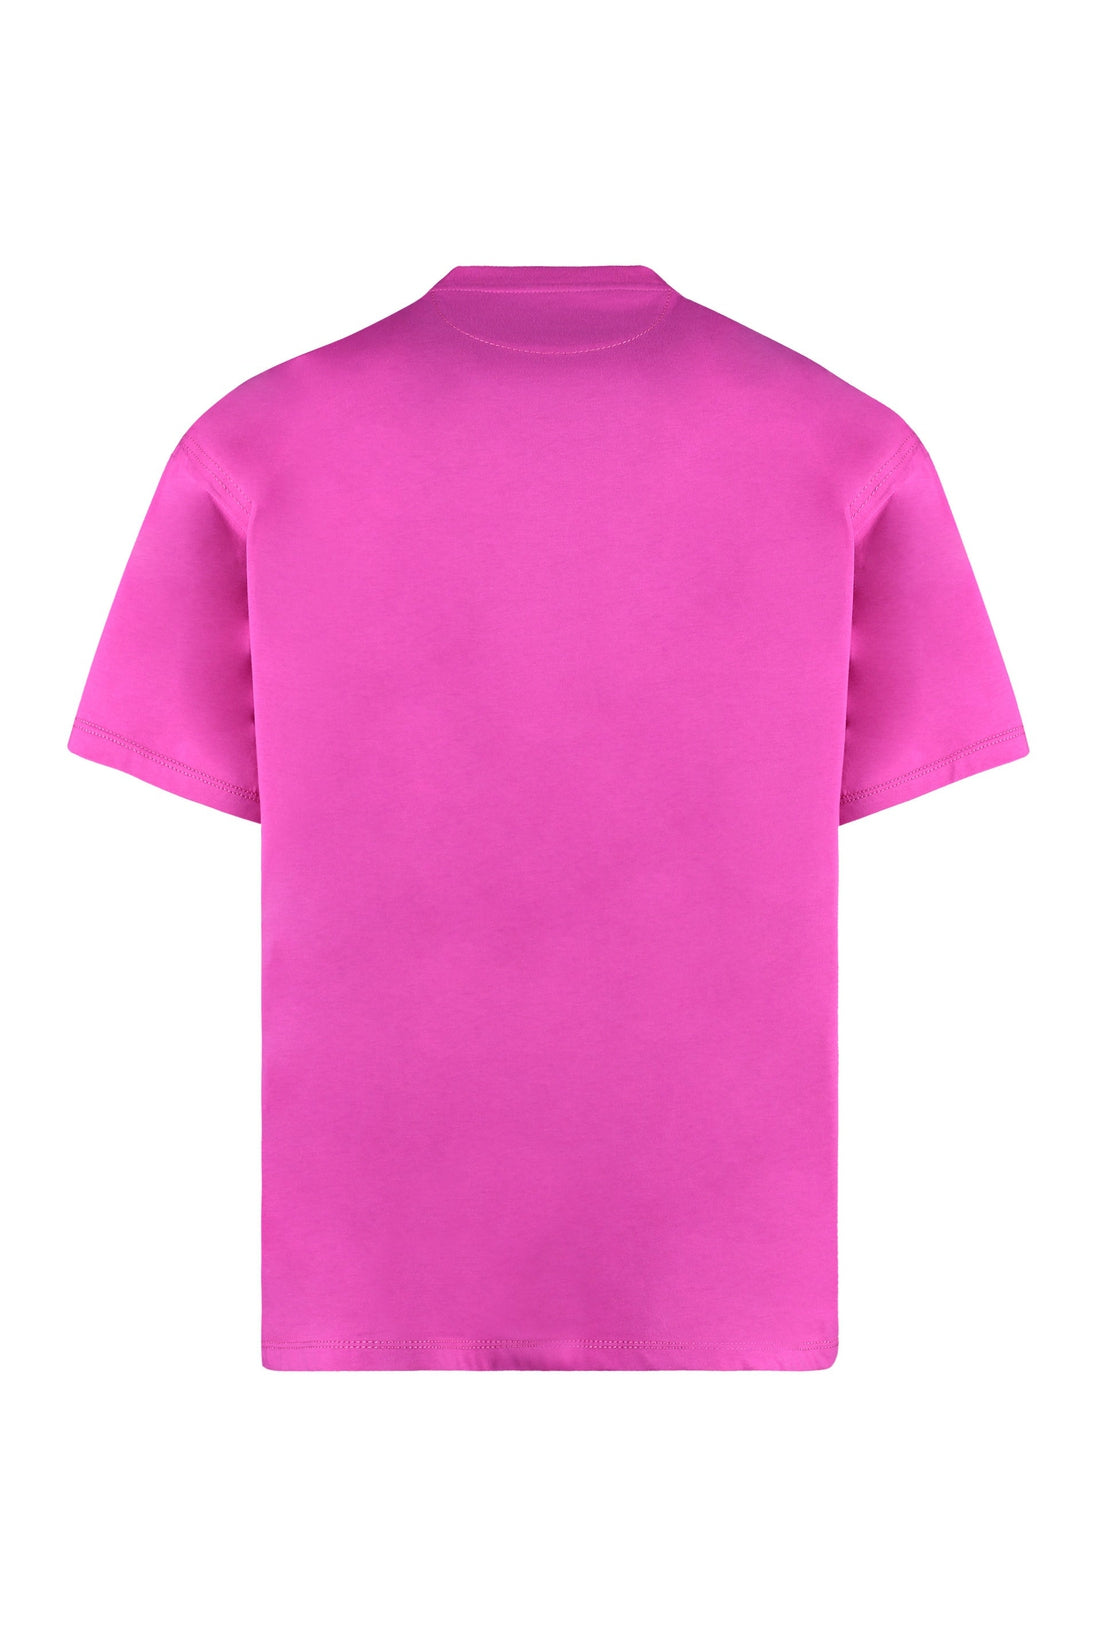 Valentino-OUTLET-SALE-Nylon panel crew-neck t-shirt-ARCHIVIST